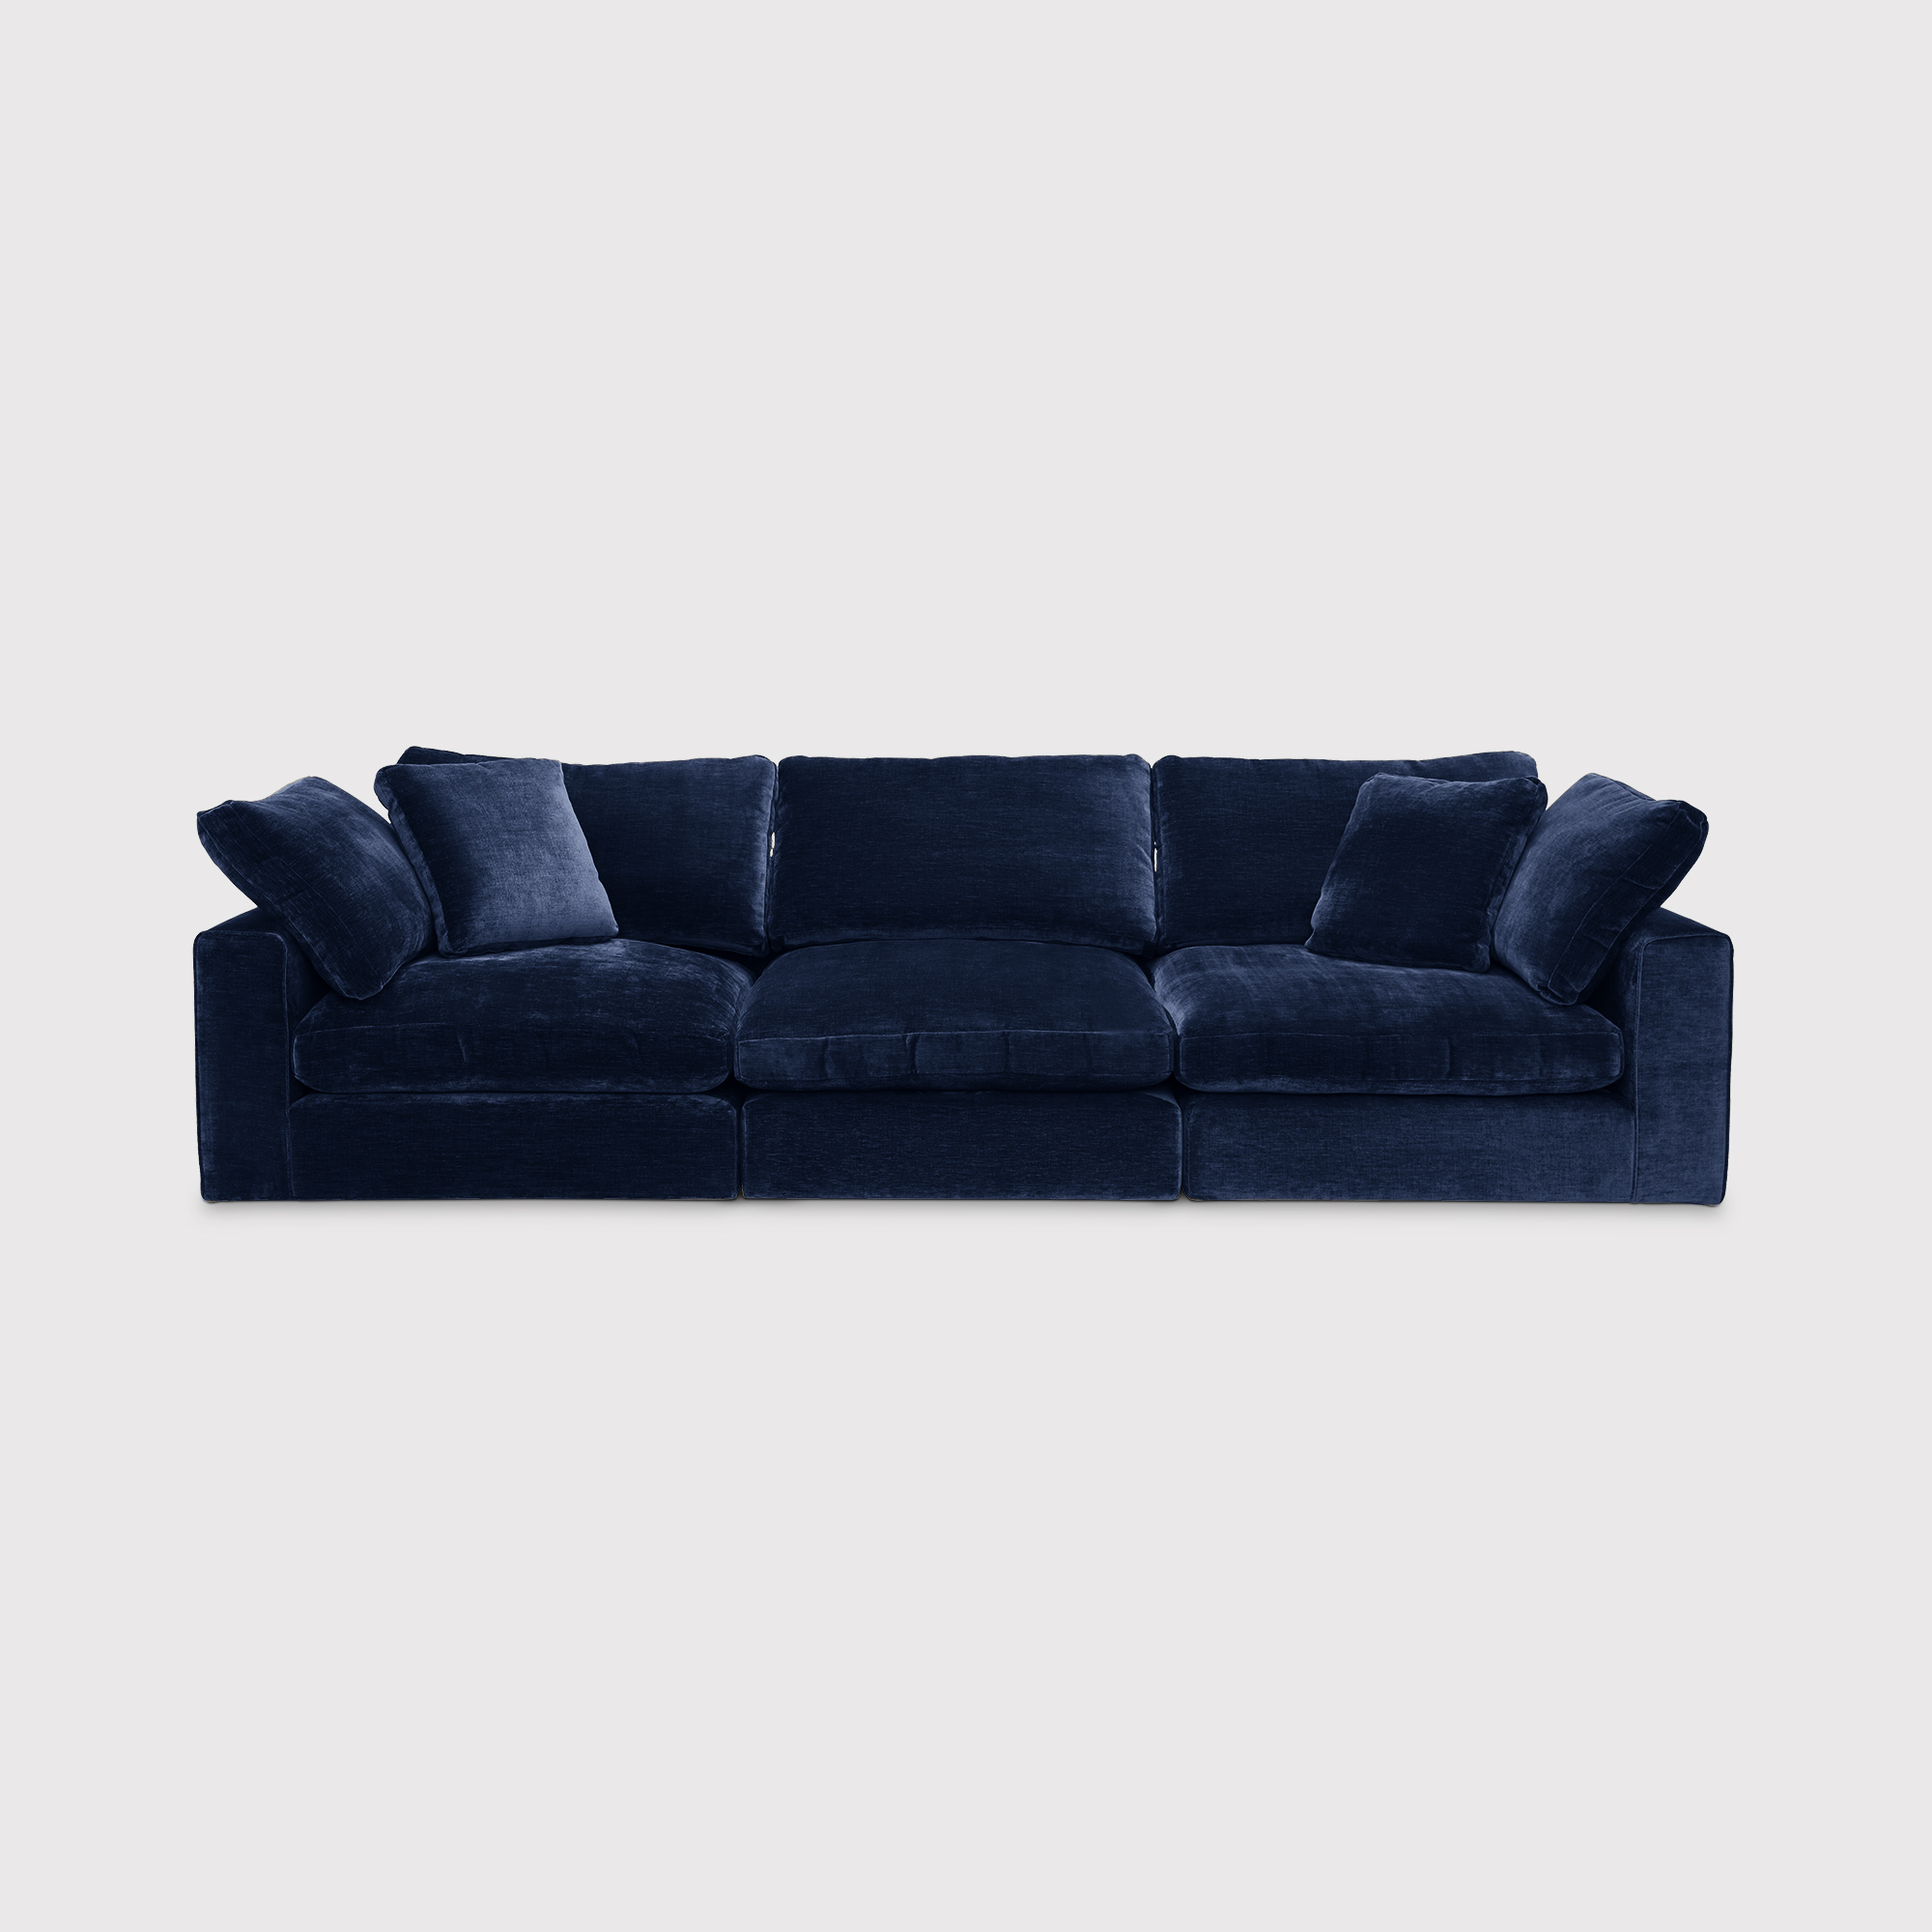 Artenis 3 Seater Sofa | Barker & Stonehouse